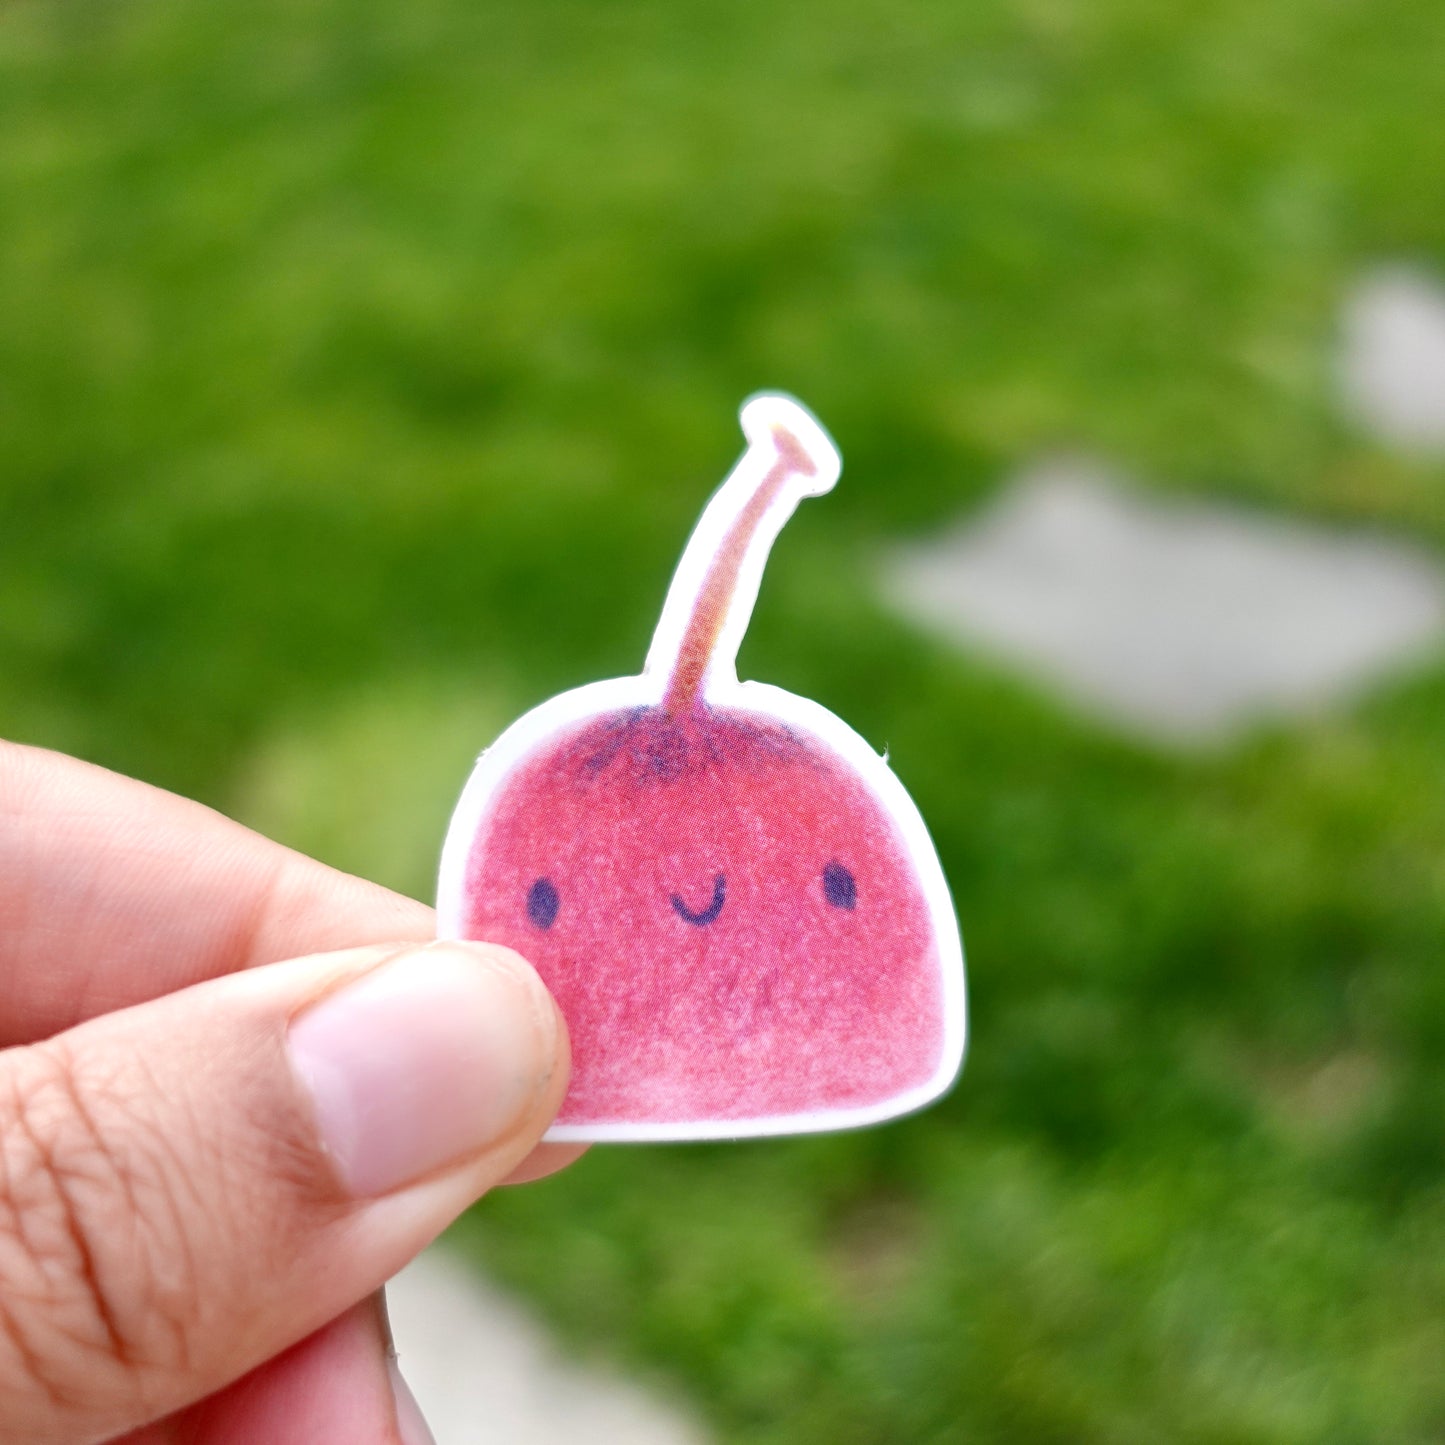 Fruit blob Sticker set